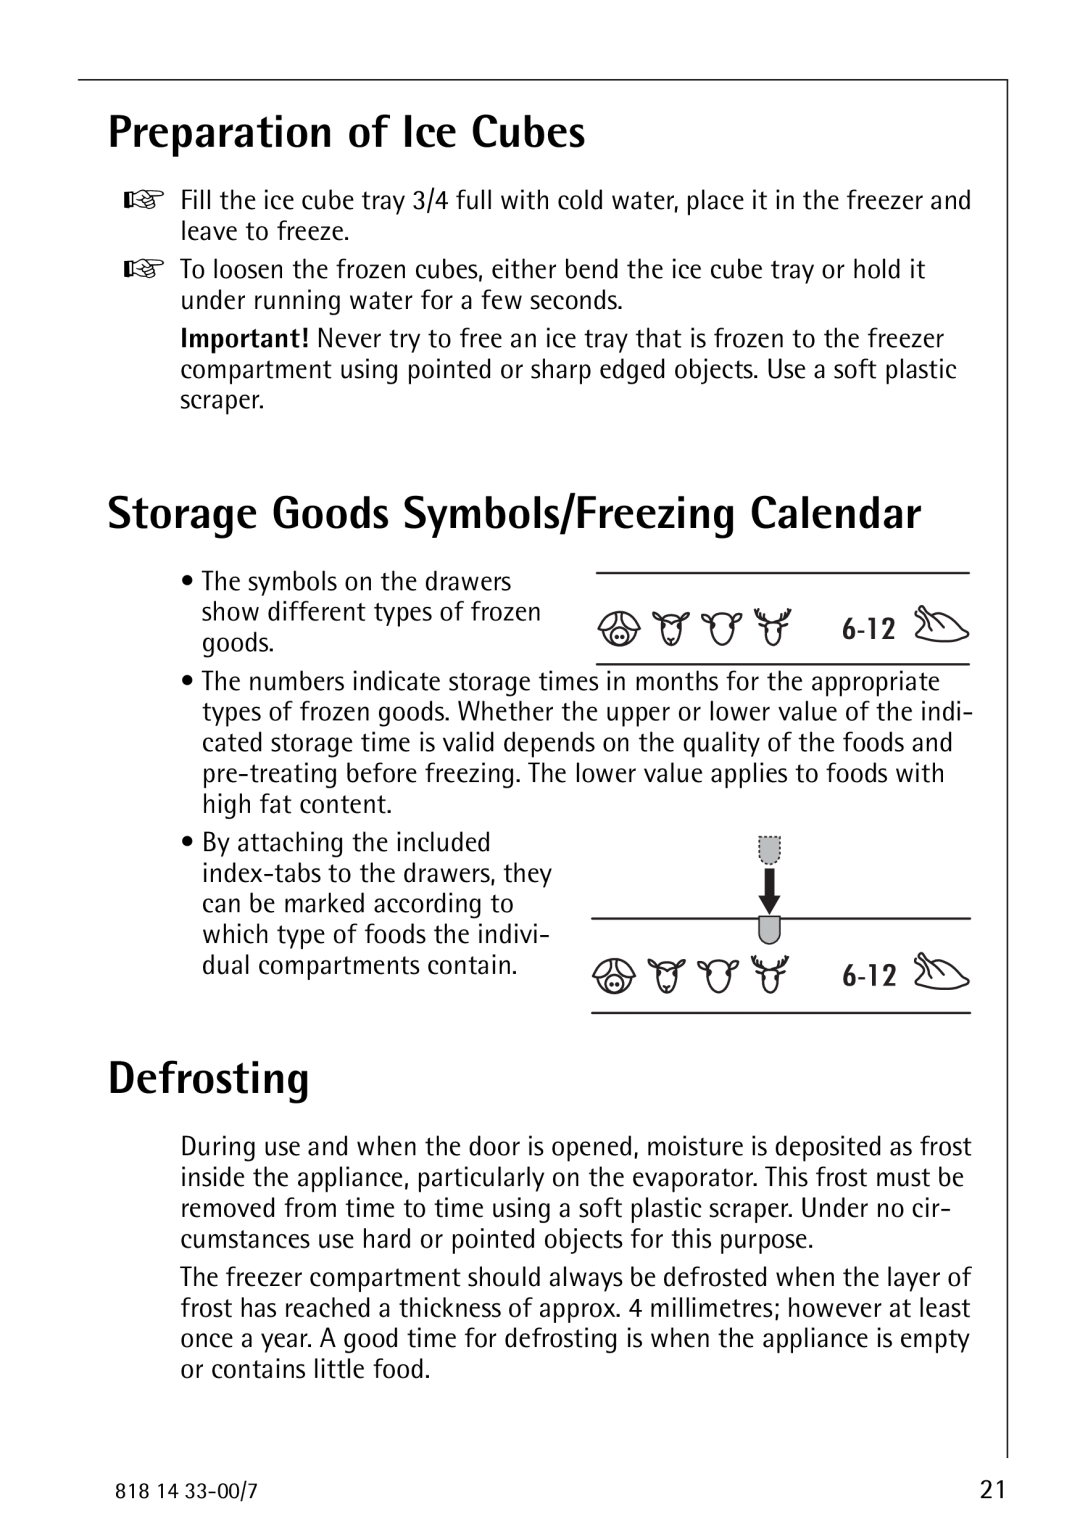 Electrolux 2170-4 operating instructions Preparation of Ice Cubes, Storage Goods Symbols/Freezing Calendar, Defrosting 